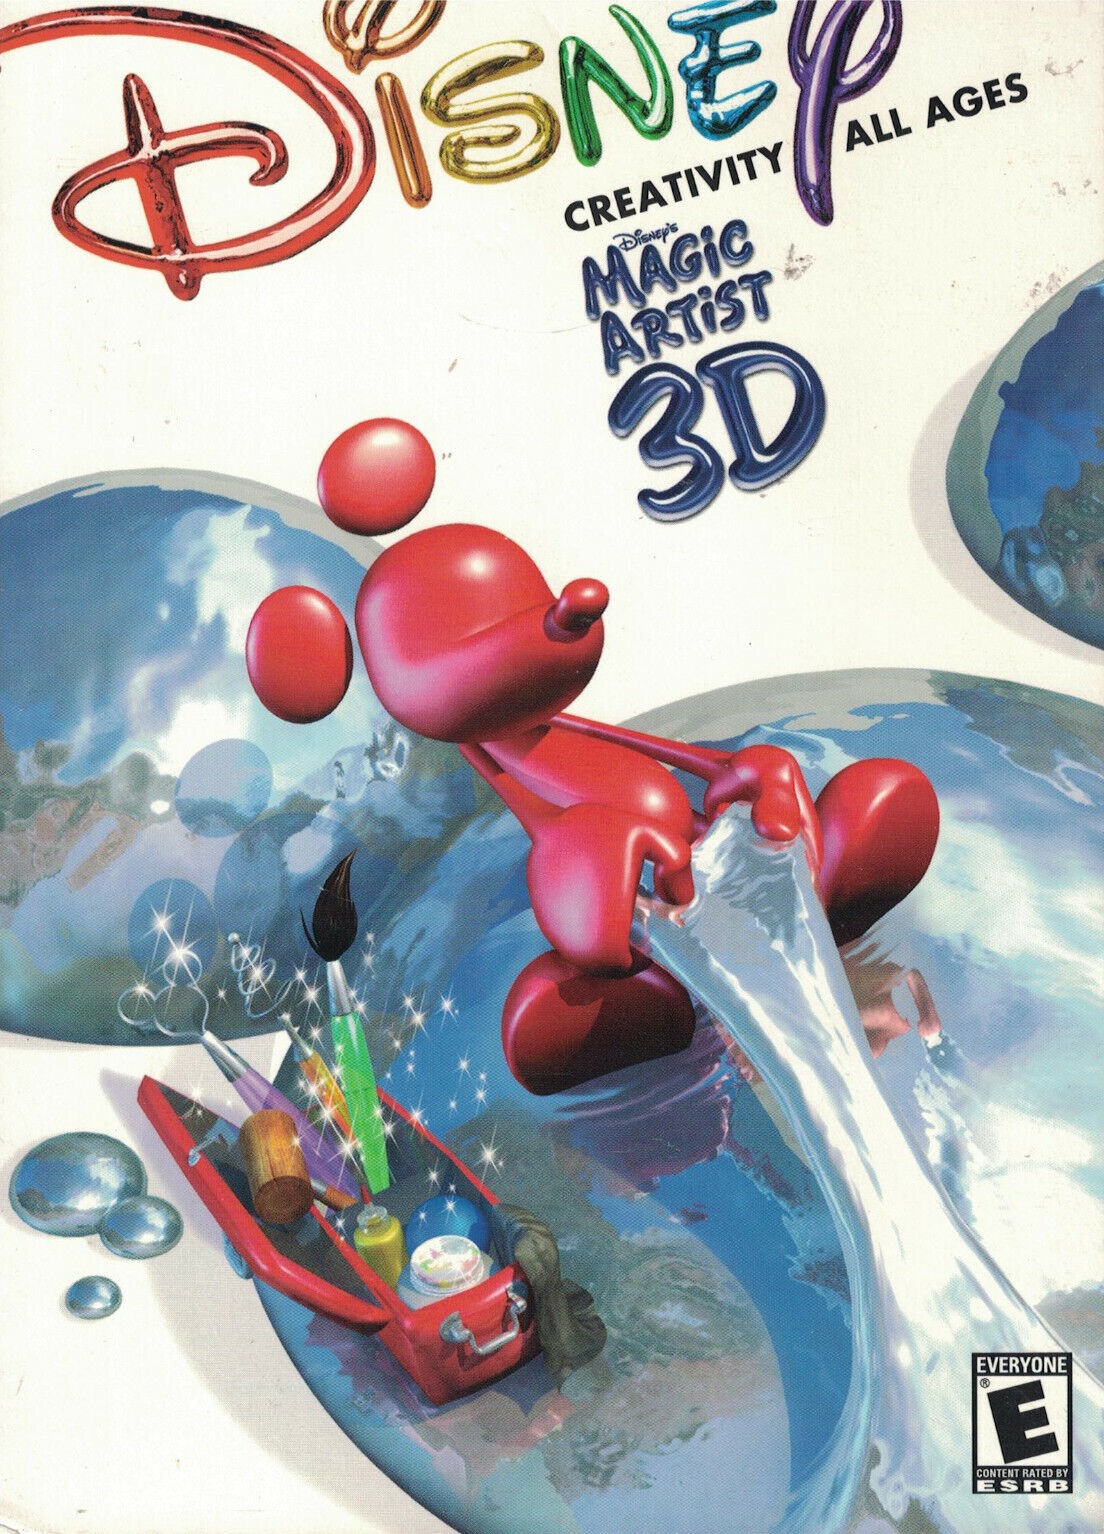 Disney's Magic Artist 3D Game Cover